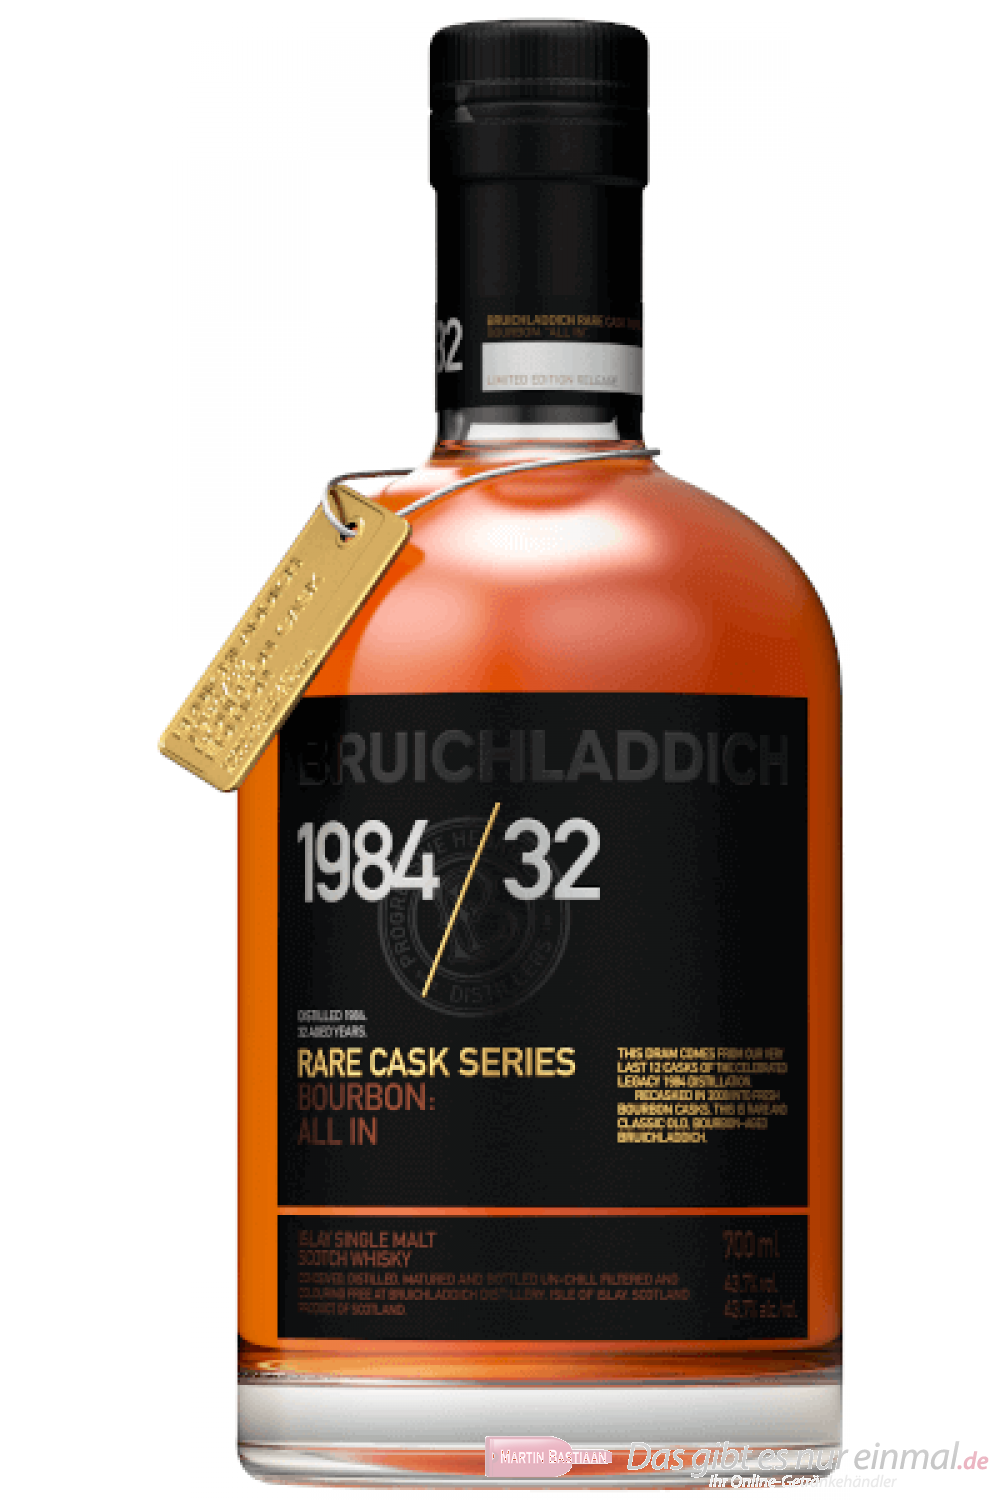 Bruichladdich Rare Cask Series 1984 Single Malt Scotch Whisky 0,7l